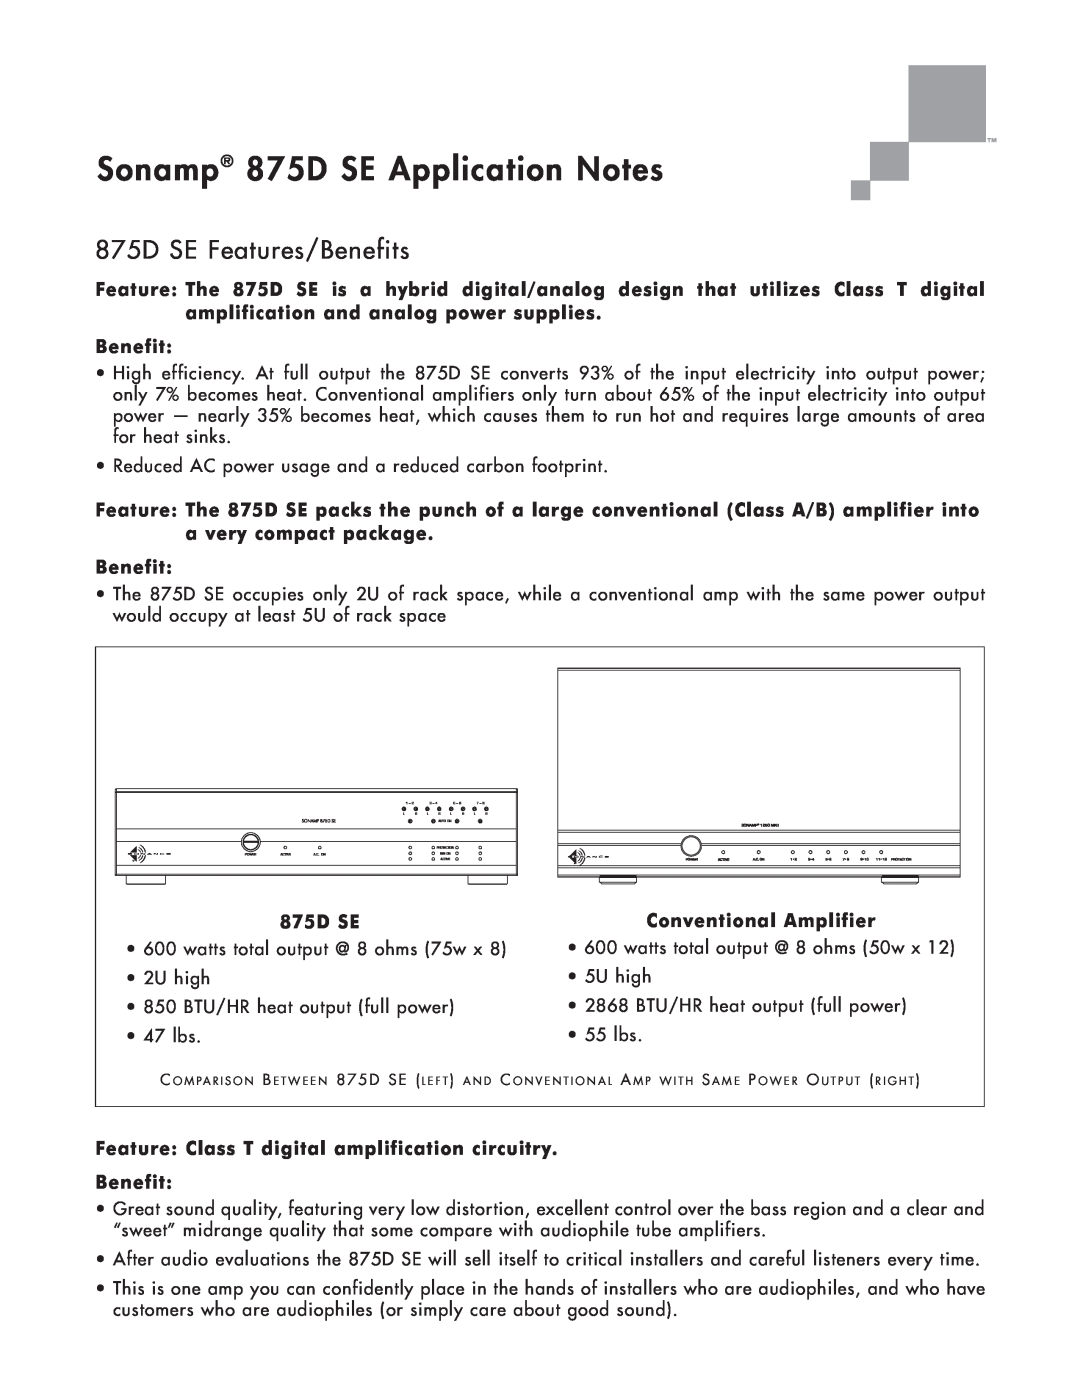 Sonance manual 875D SE Features/Benefits, Sonamp 875D SE Application Notes, Conventional Amplifier 